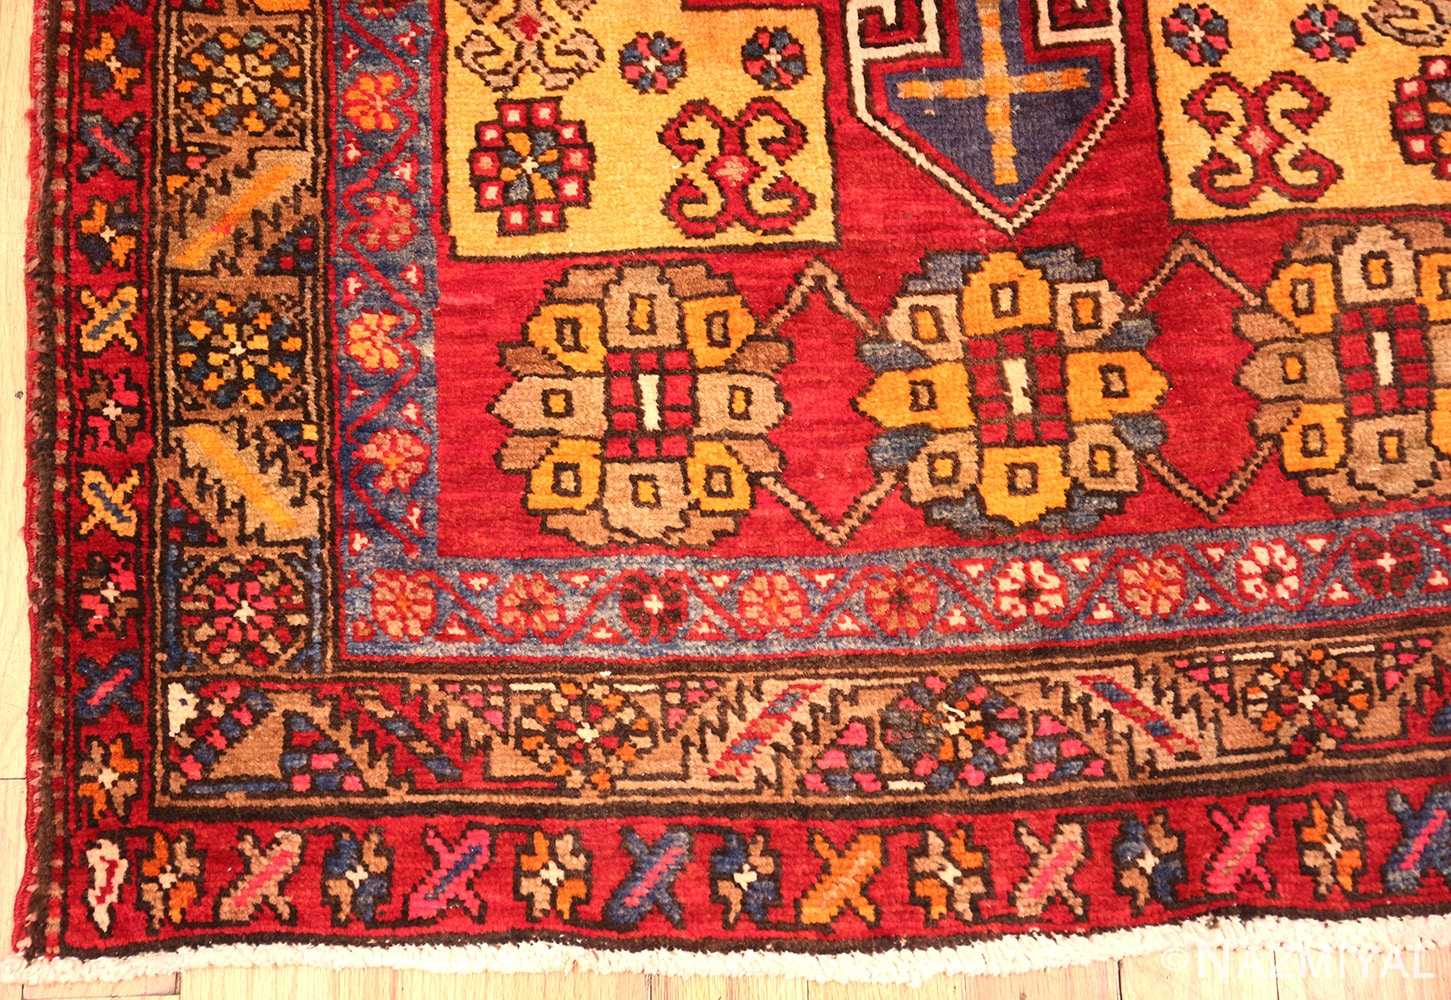 Antique Persian Heriz Tribal Runner 72050 Nazmiyal Antique Rugs